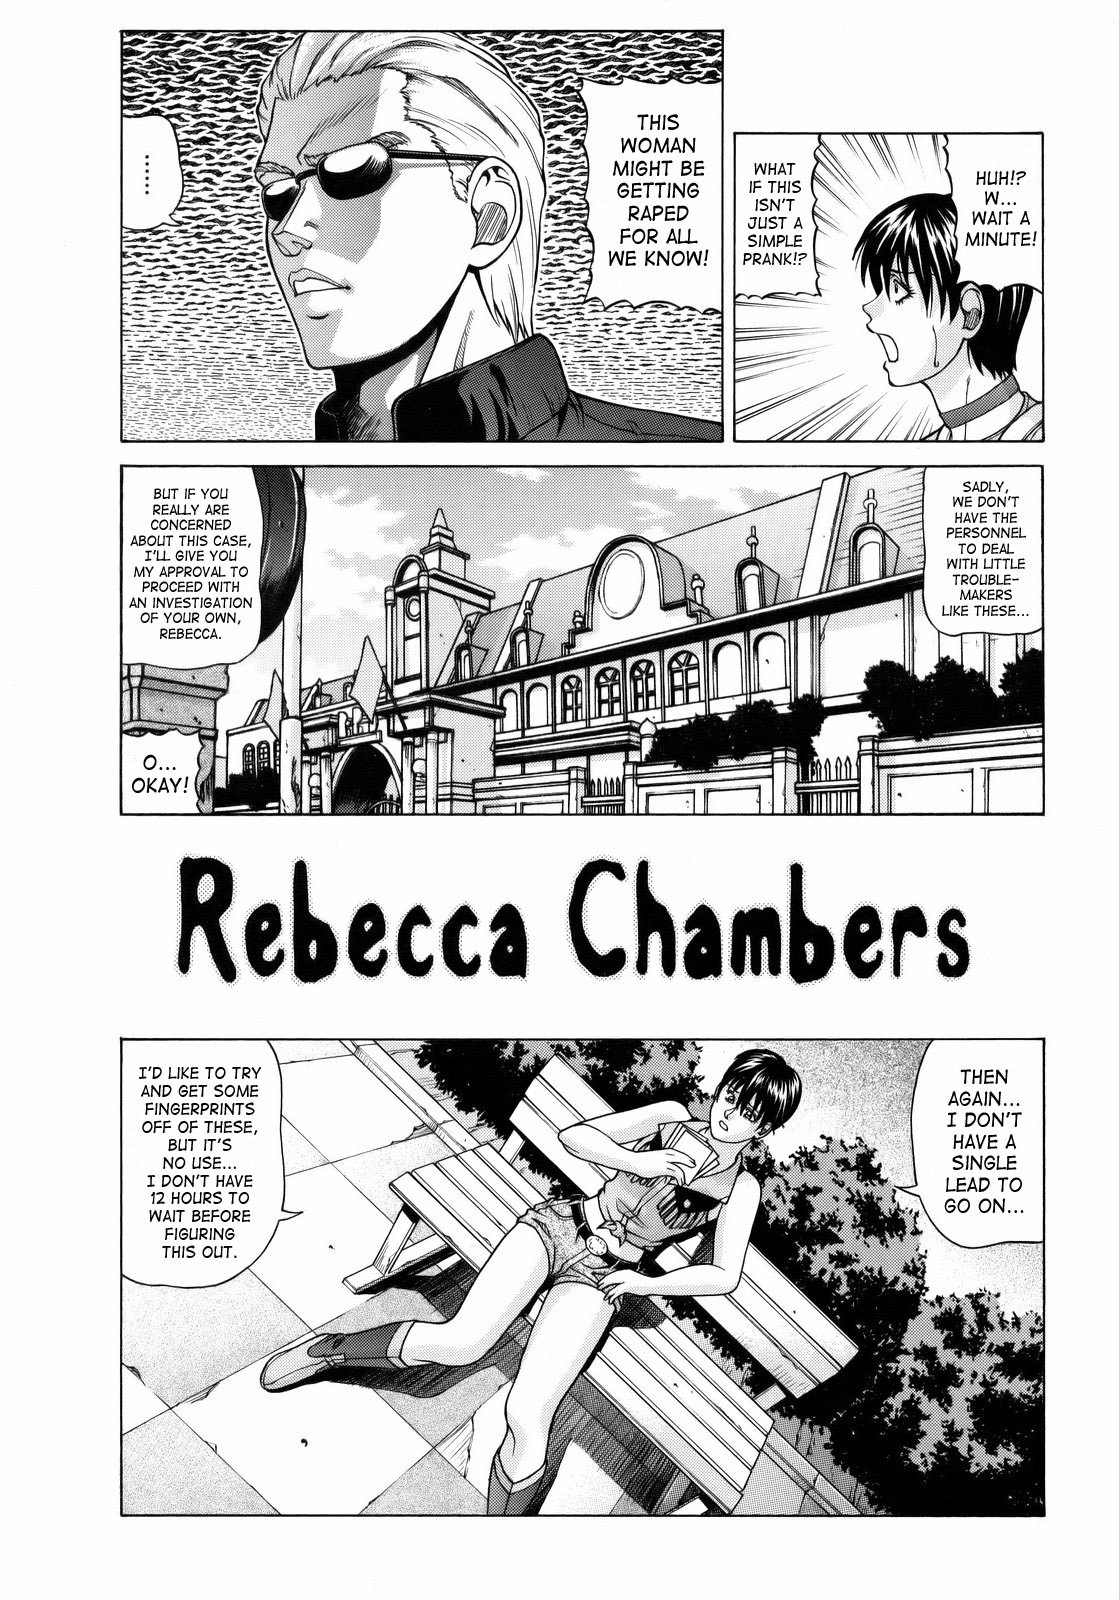 Rebecca Chambers resident evil 3 hentai manga